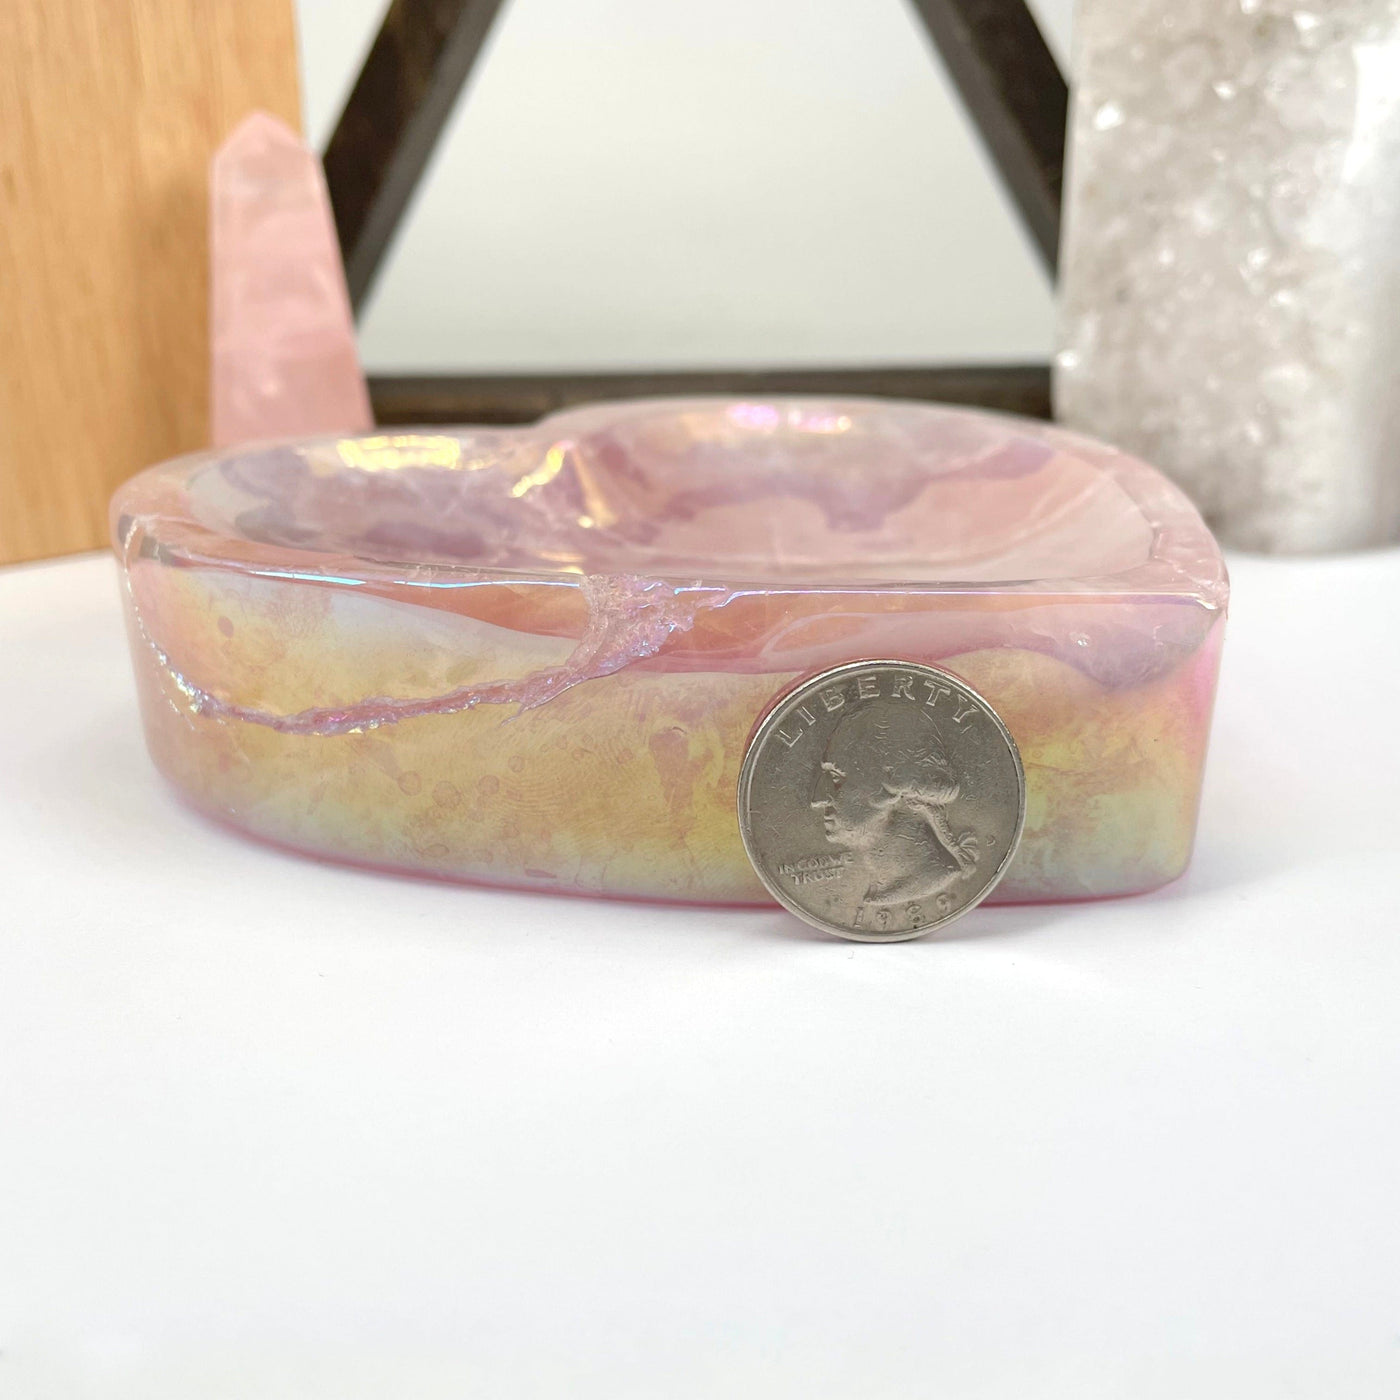 side view of angel aura rose quartz heart bowl with quarter for thickness